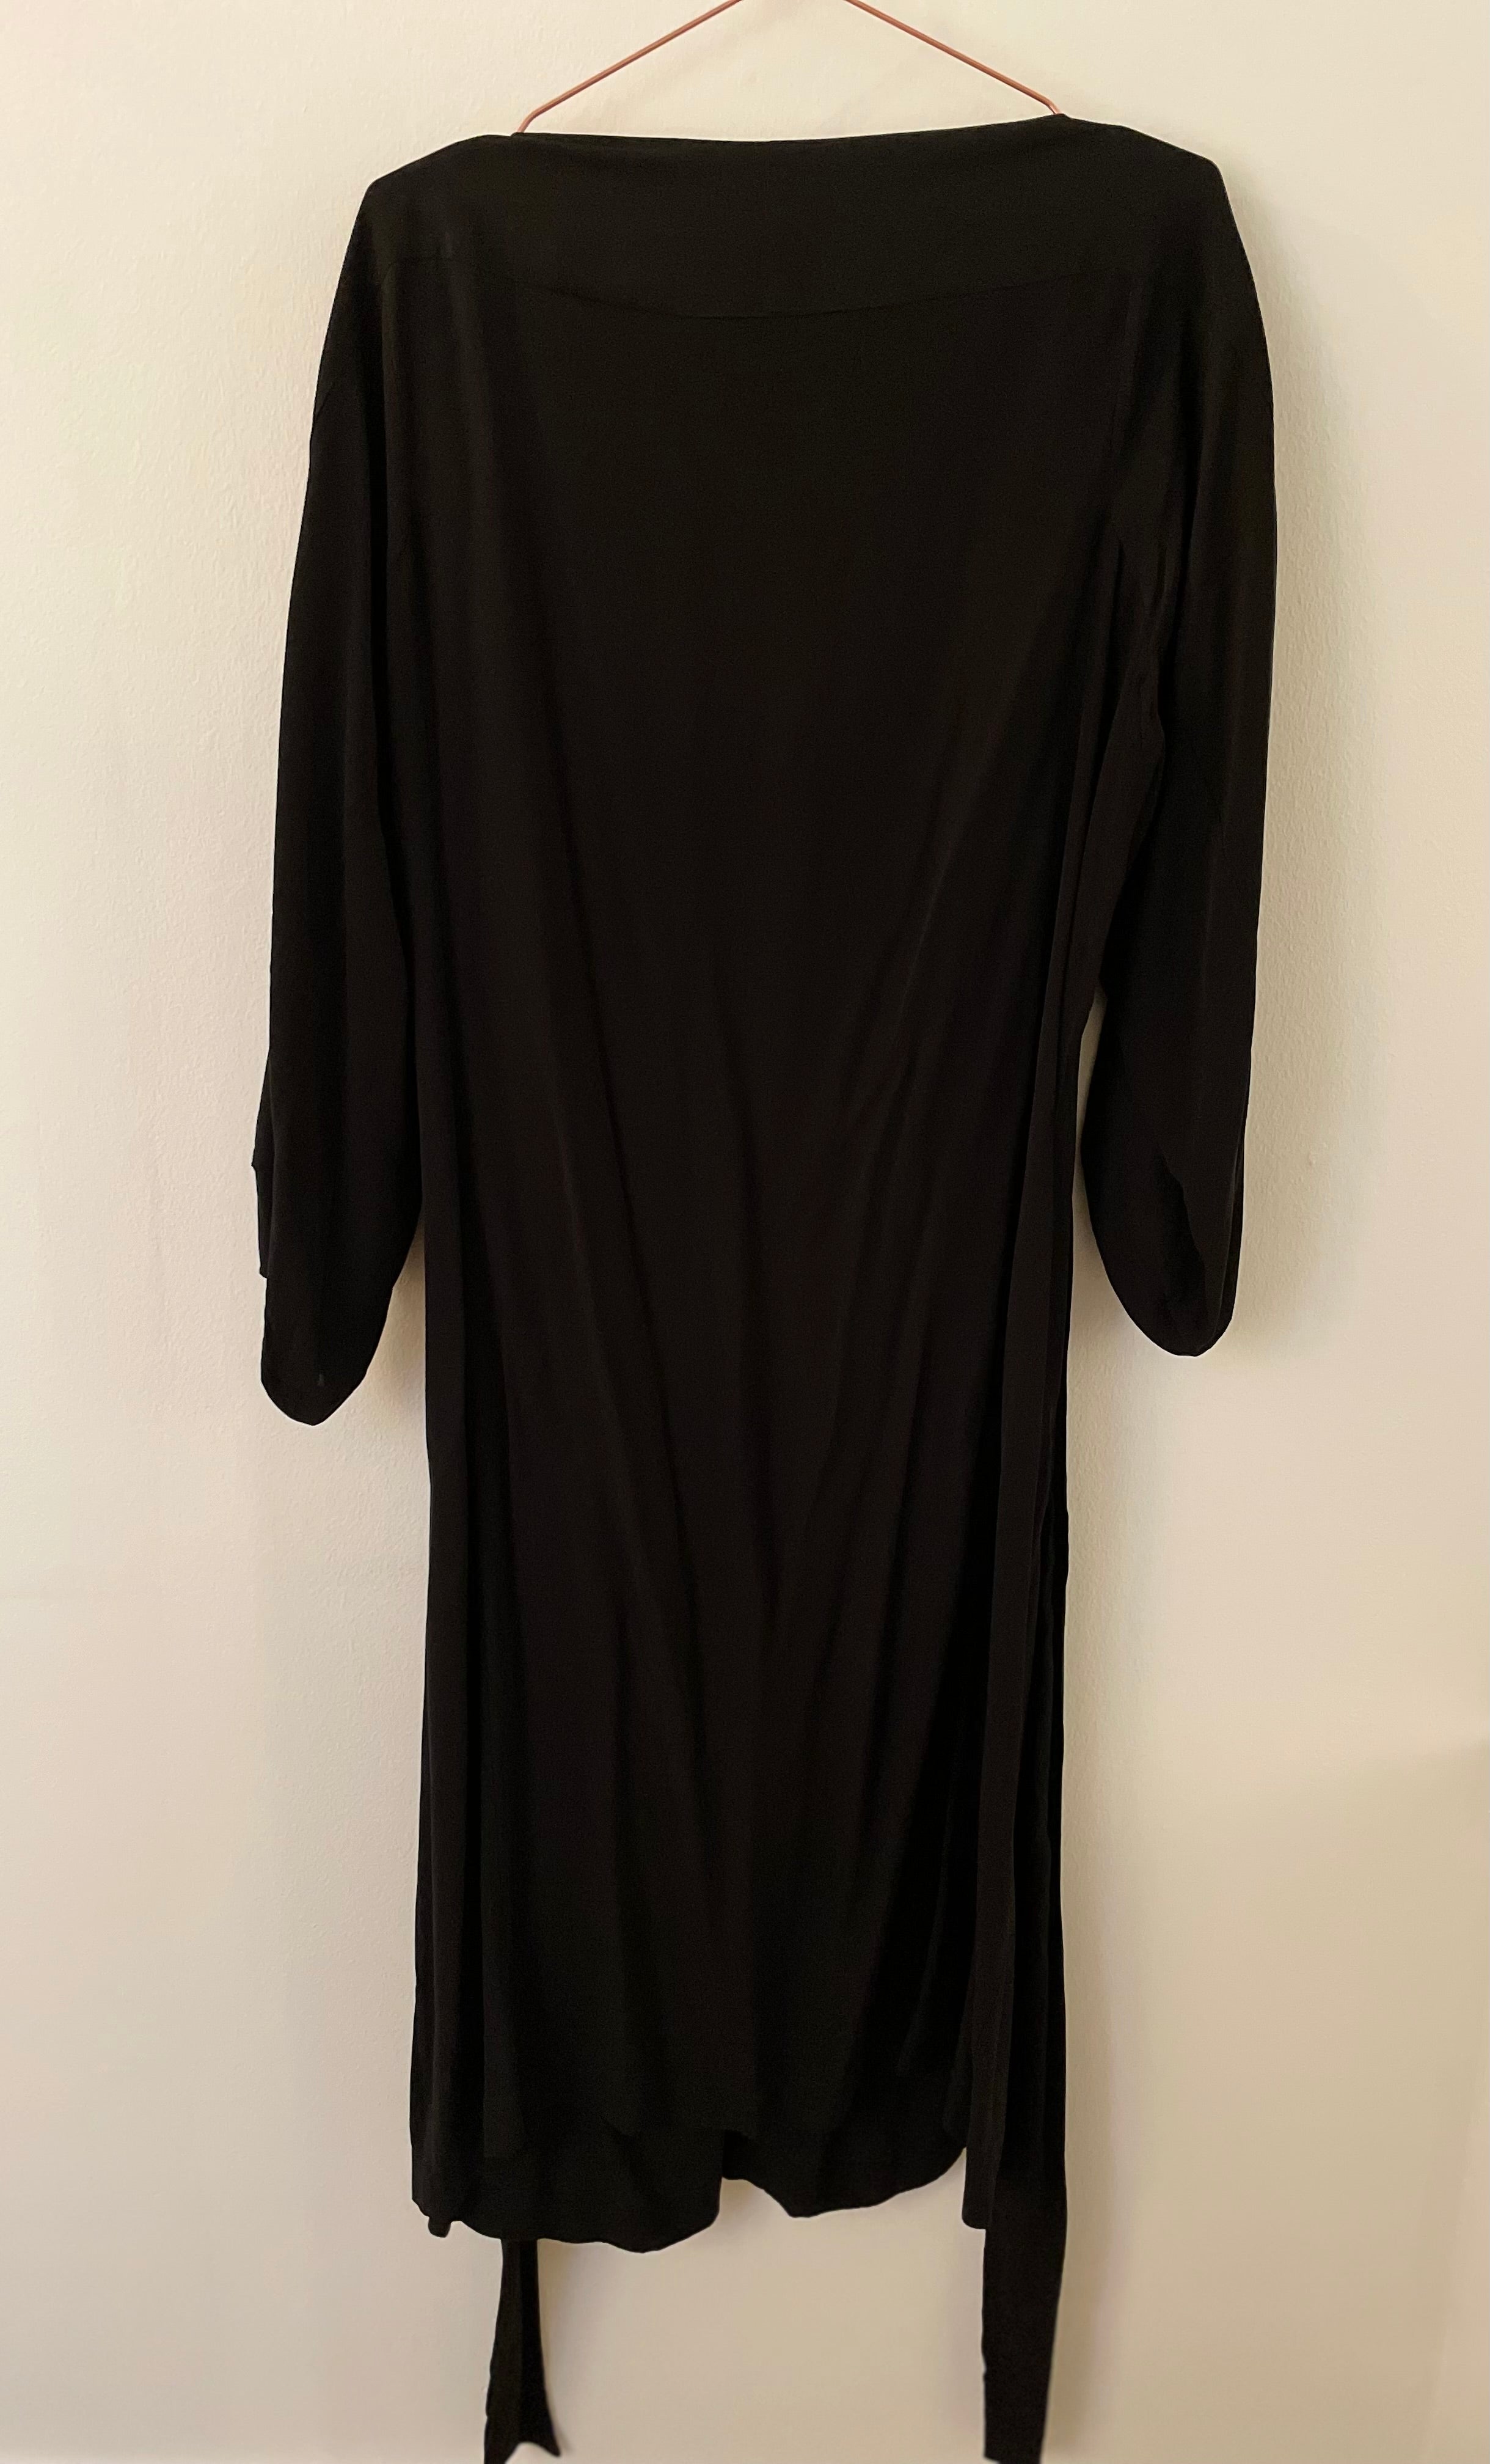 Black long dress - ISABEL MARANT ETOILE - M